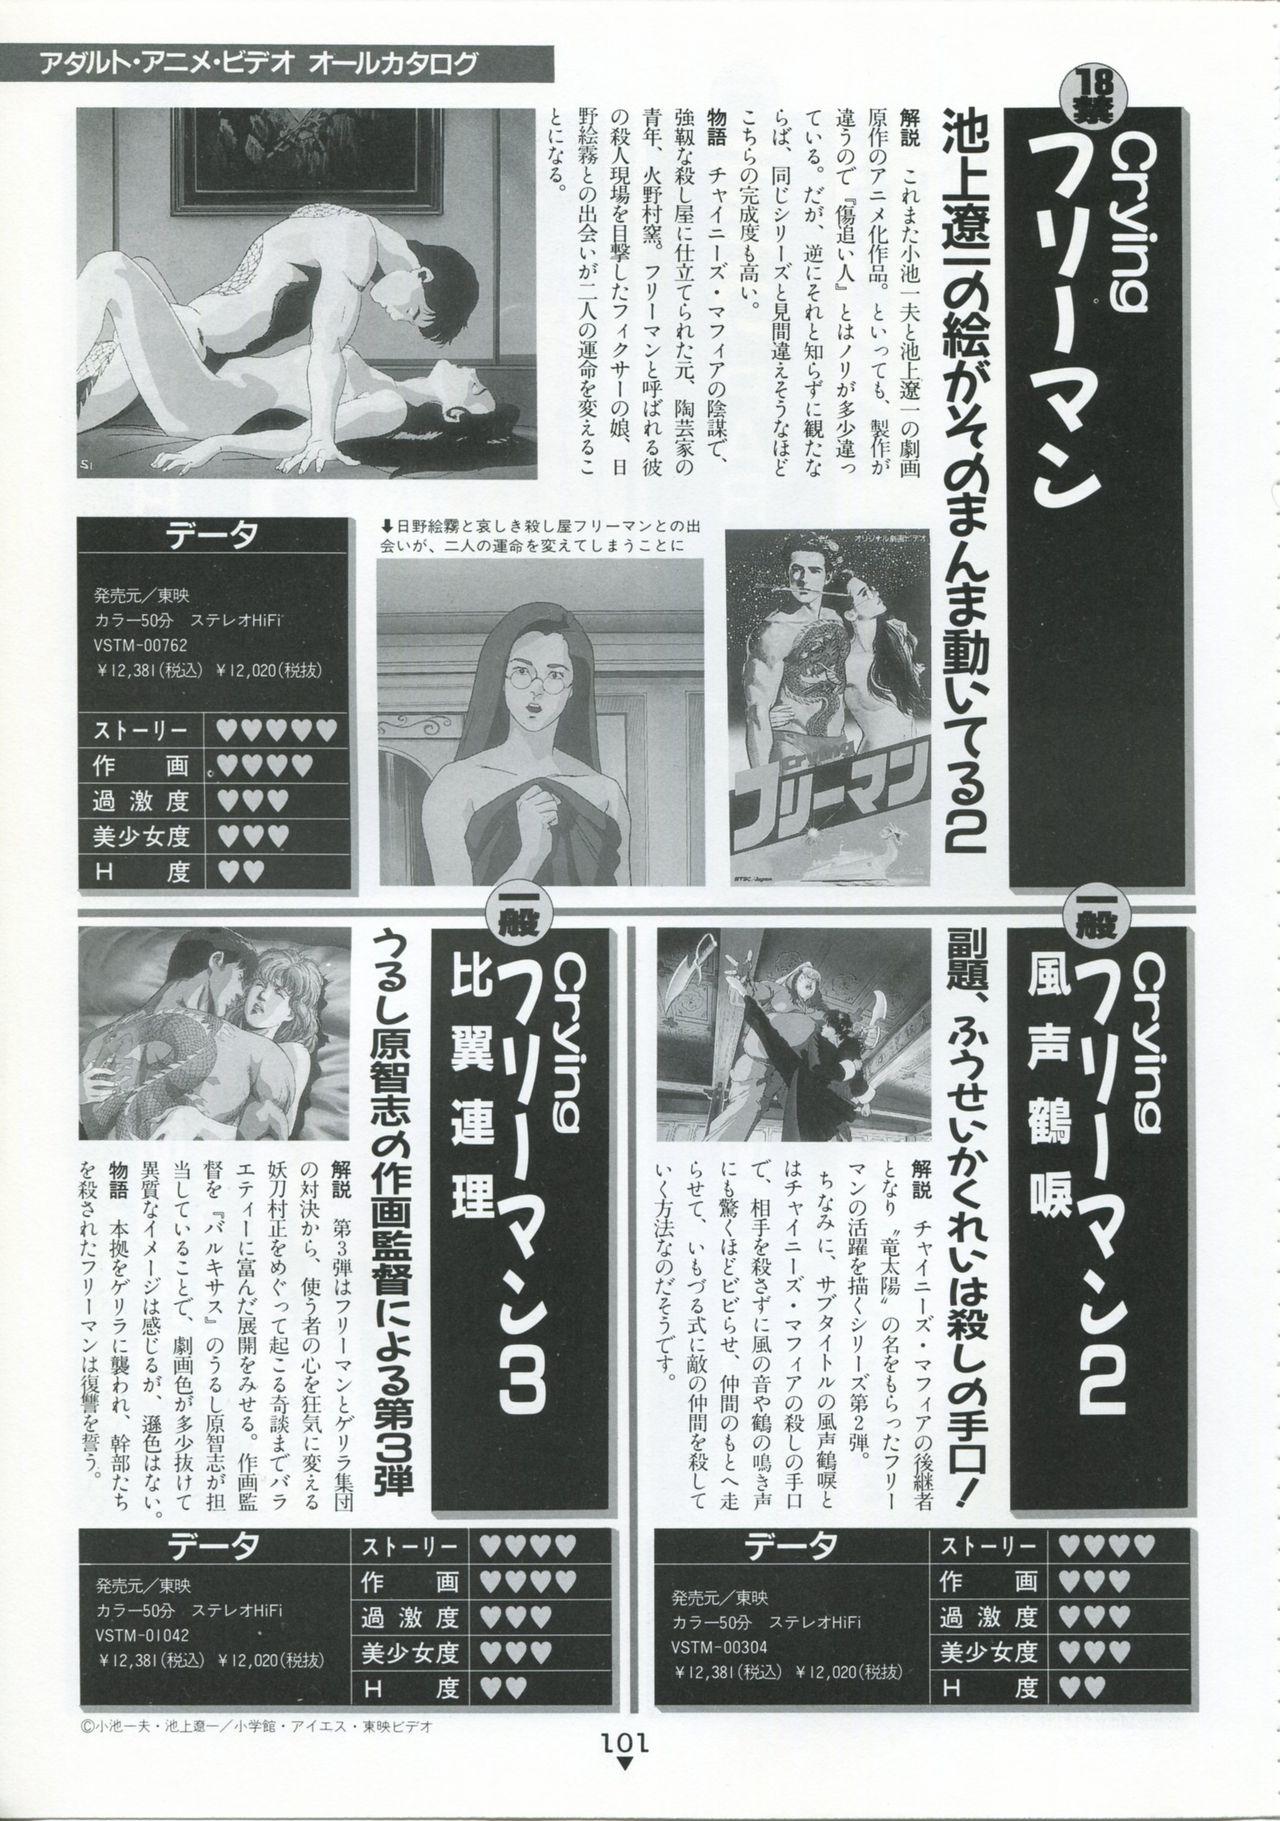 Bishoujo Anime Daizenshuu - Adult Animation Video Catalog 1991 96